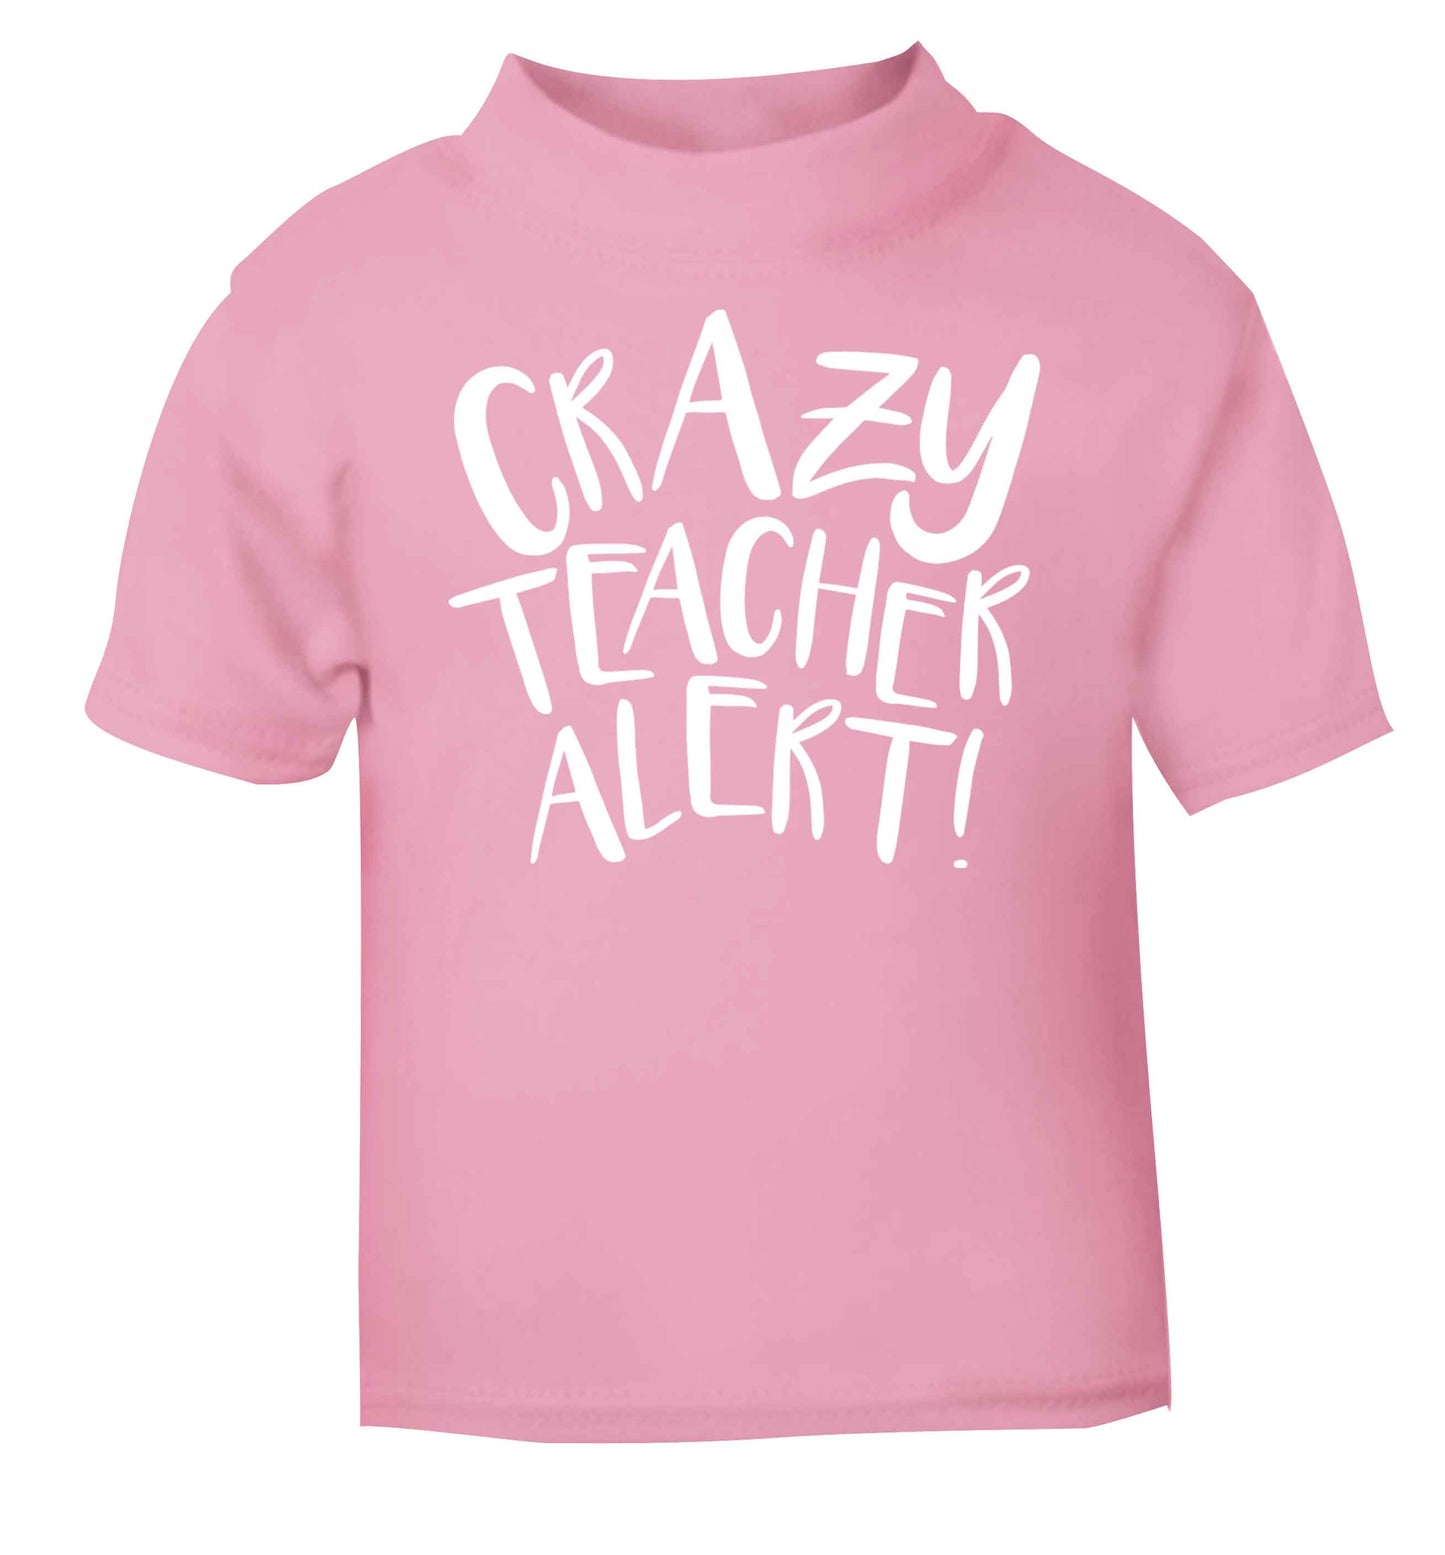 Crazy teacher alert light pink baby toddler Tshirt 2 Years